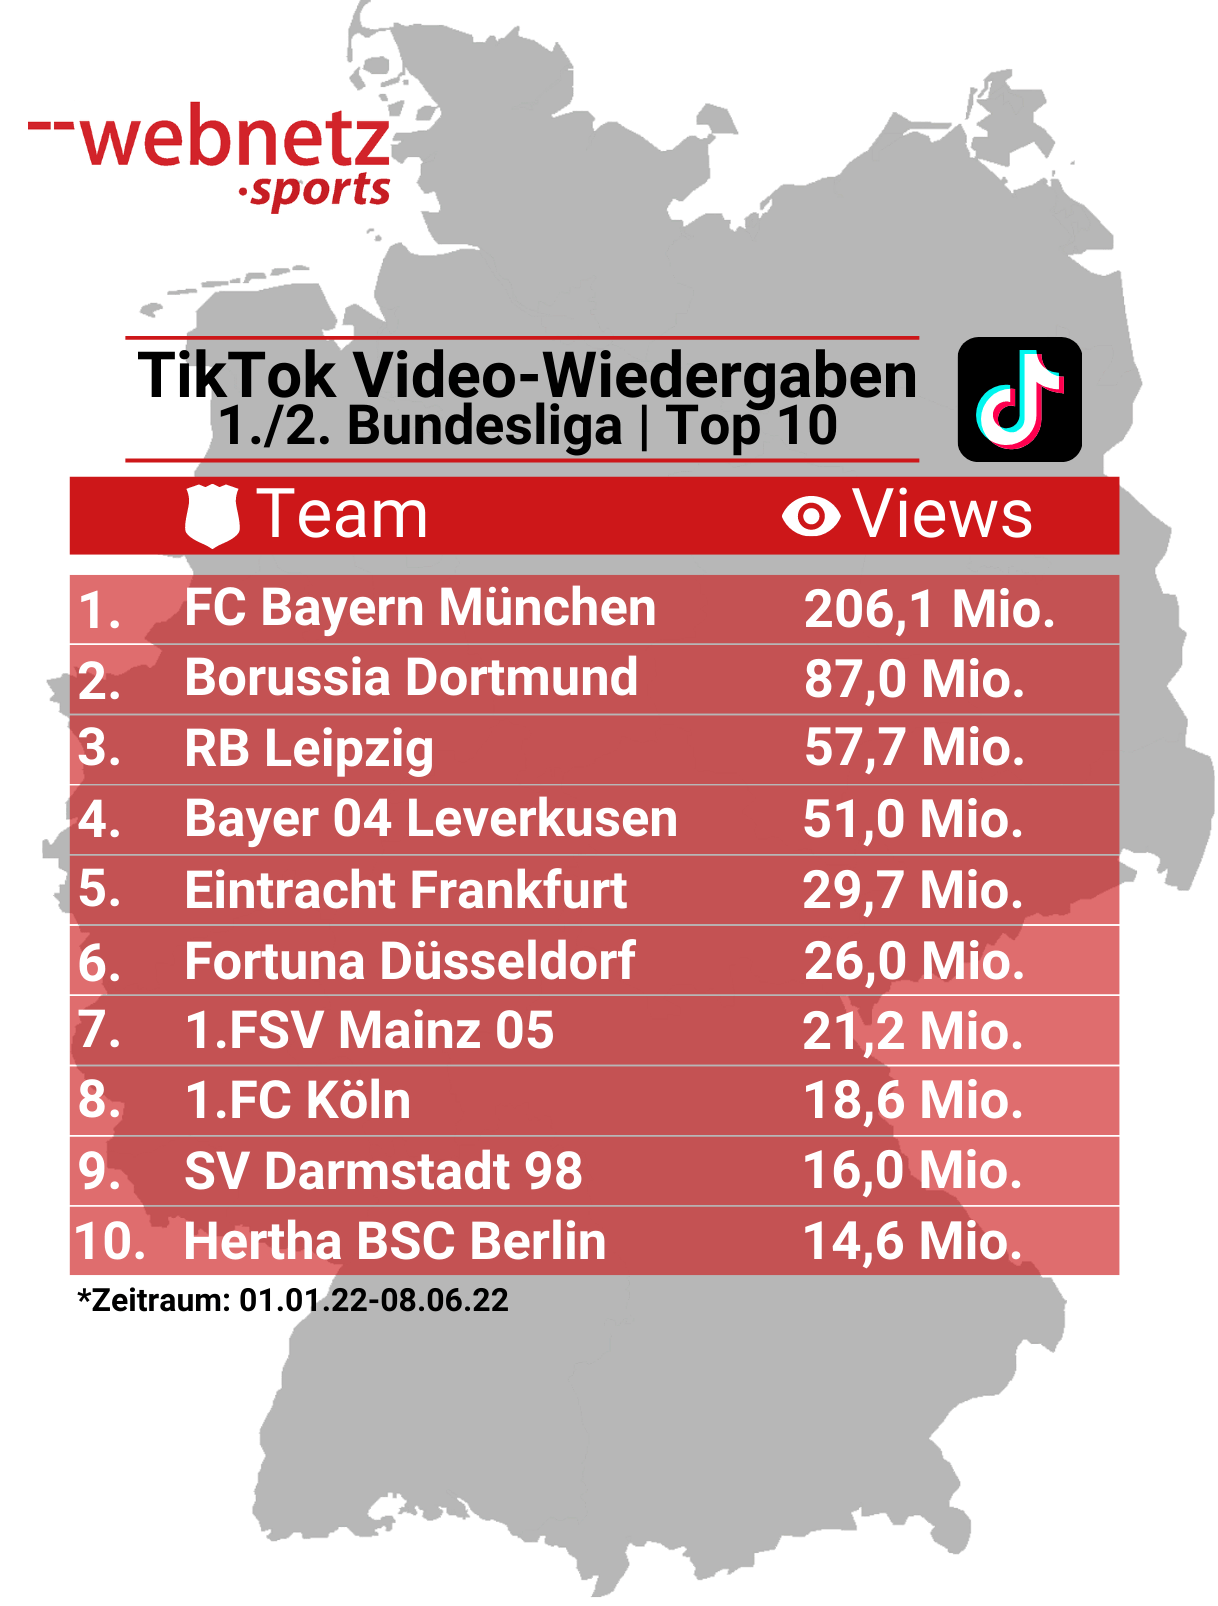 Top 10 Video-Wiedergaben TikTok Bundesliga